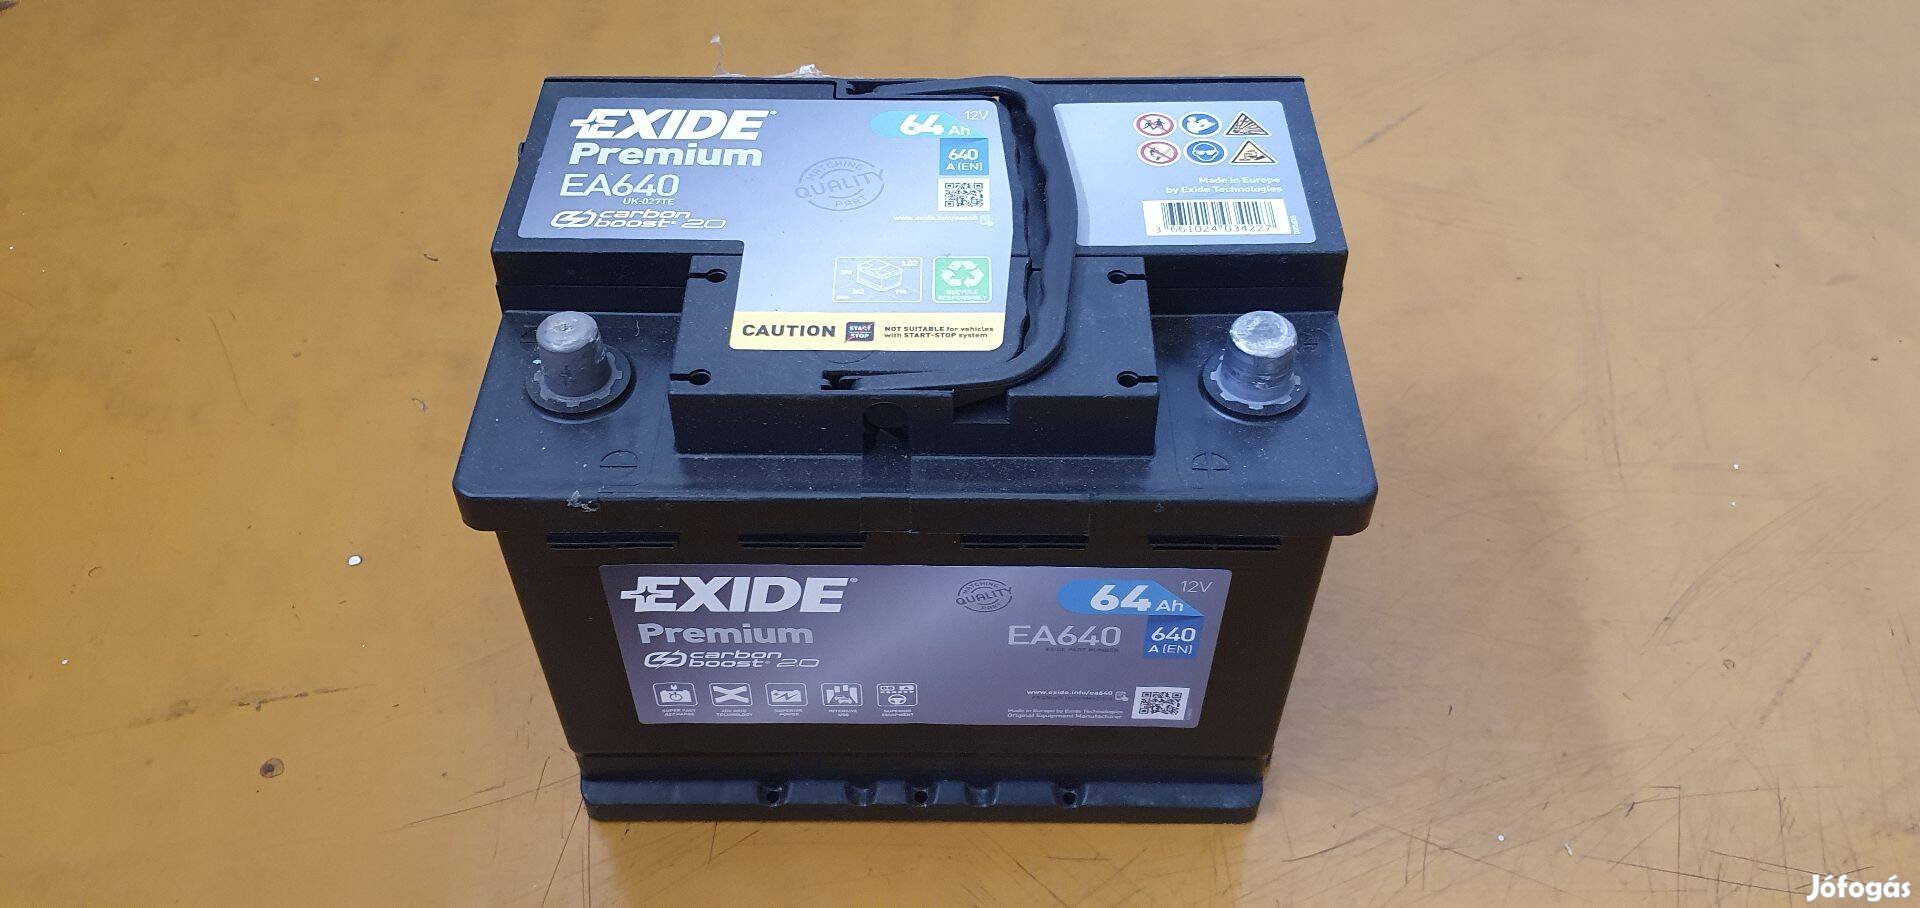 Exide Premium EA640 64Ah akkumulátor eladó